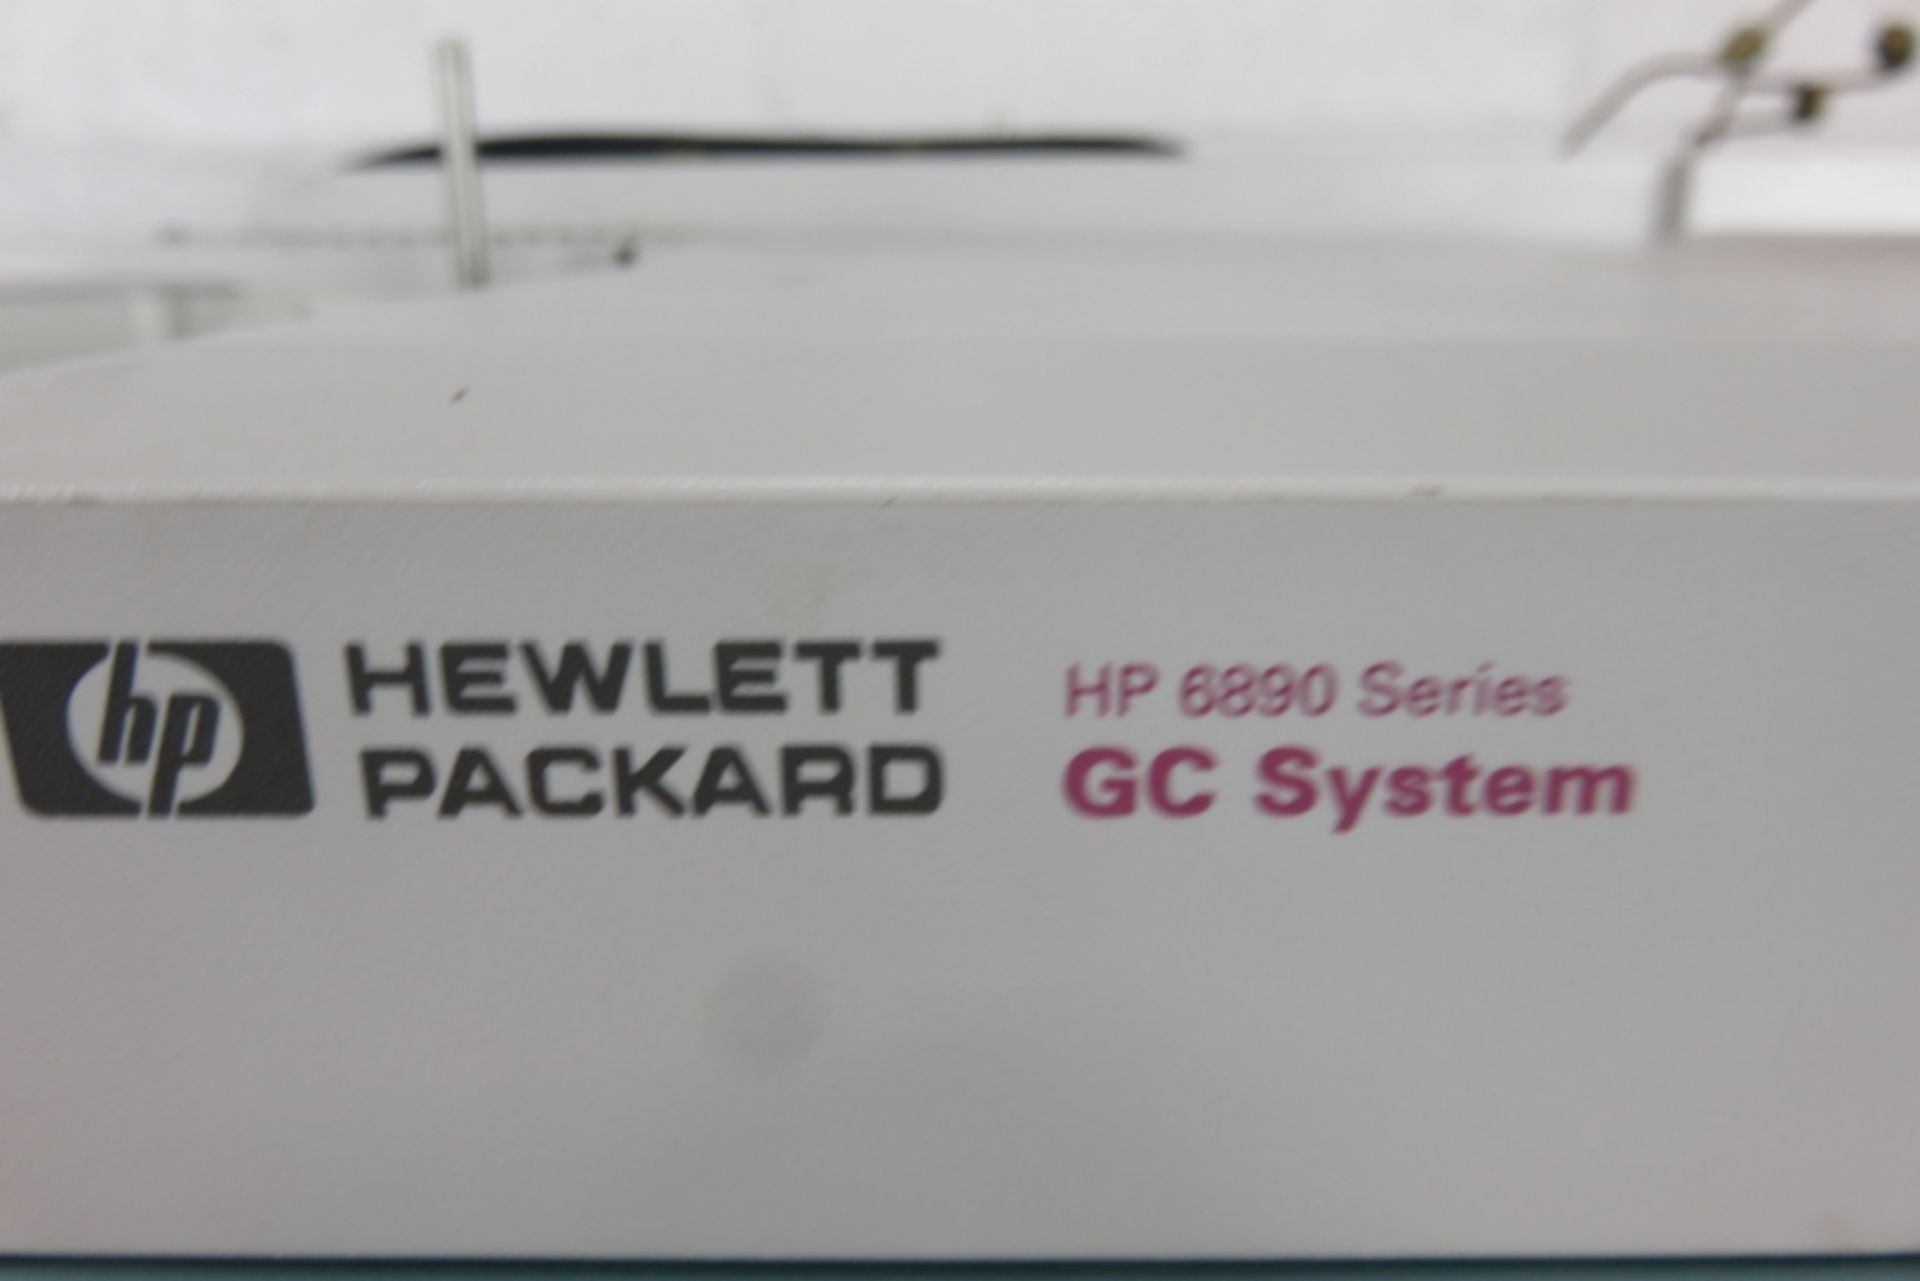 HP 6890 Gas Chromatograph - Image 7 of 8